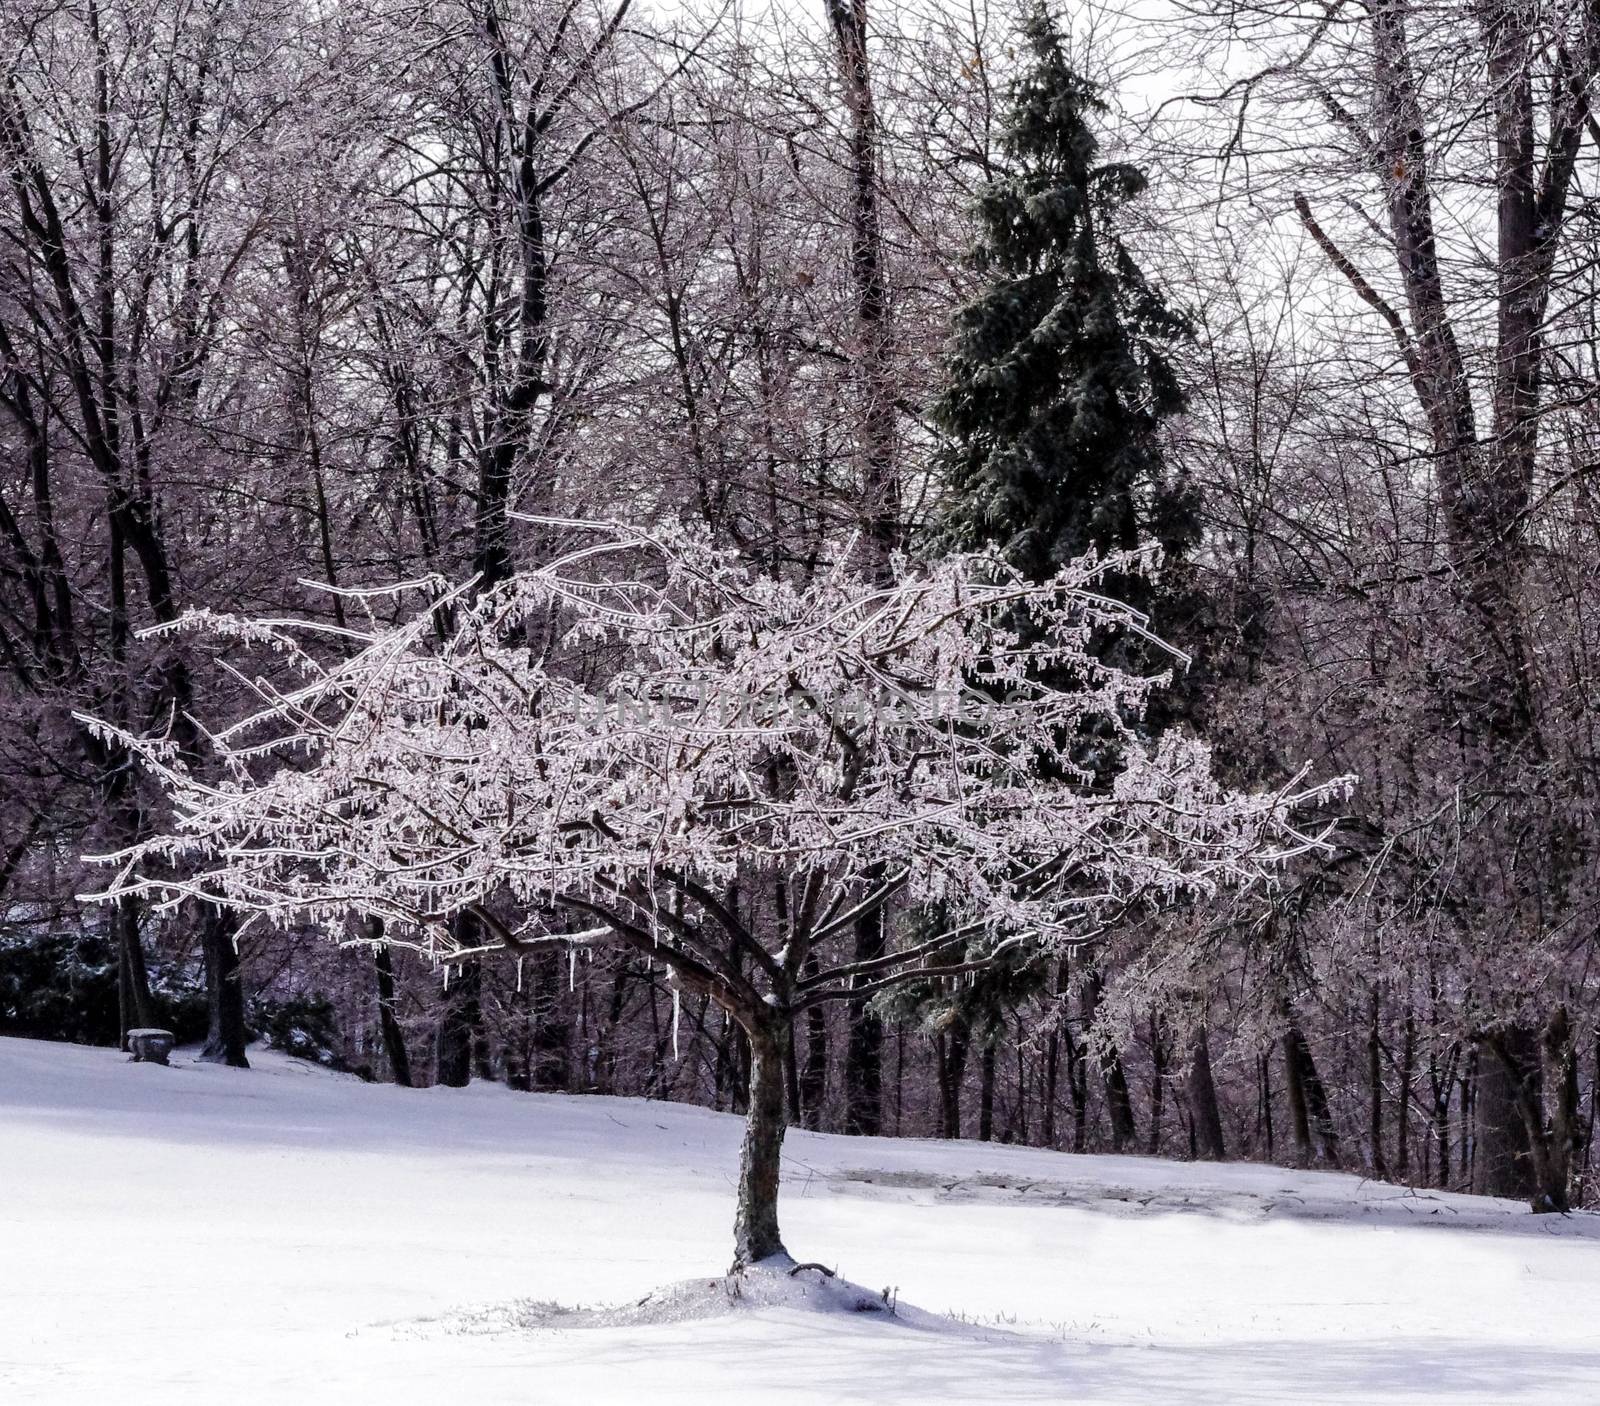 Ice-covered tree snowy winter scene